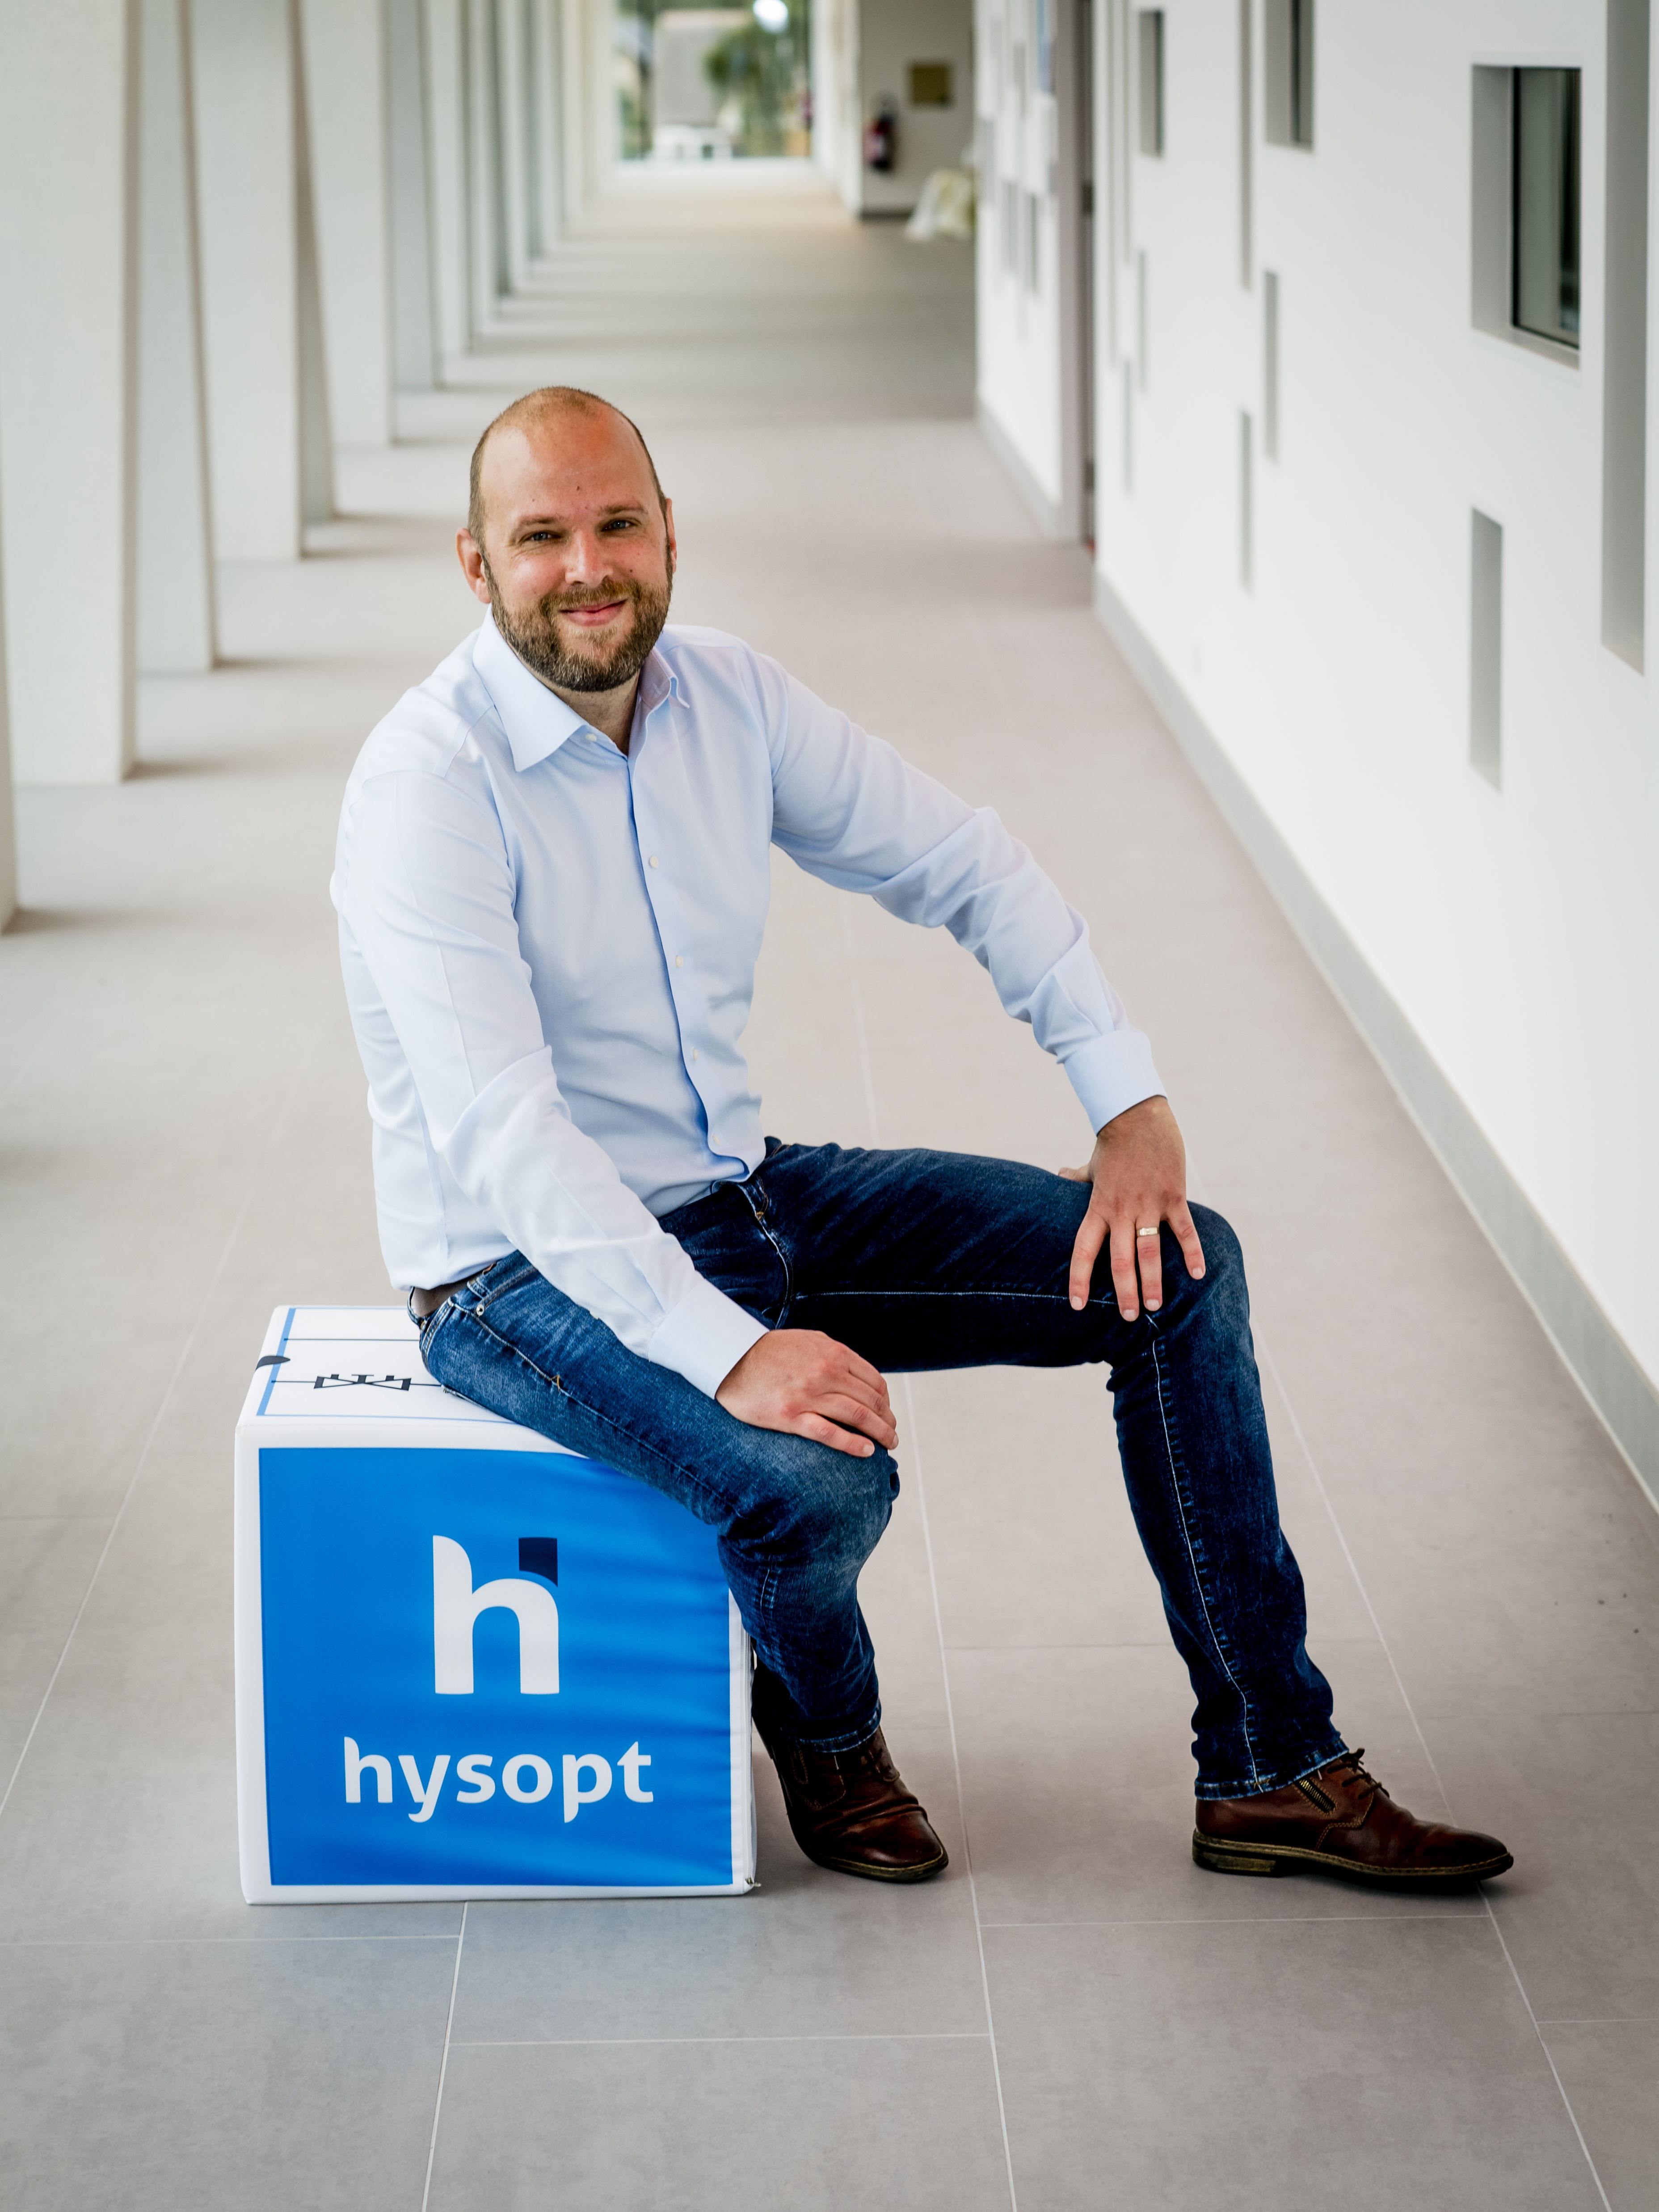 Roel Vandenbulcke, CEO এবং Hysopt এর প্রতিষ্ঠাতা